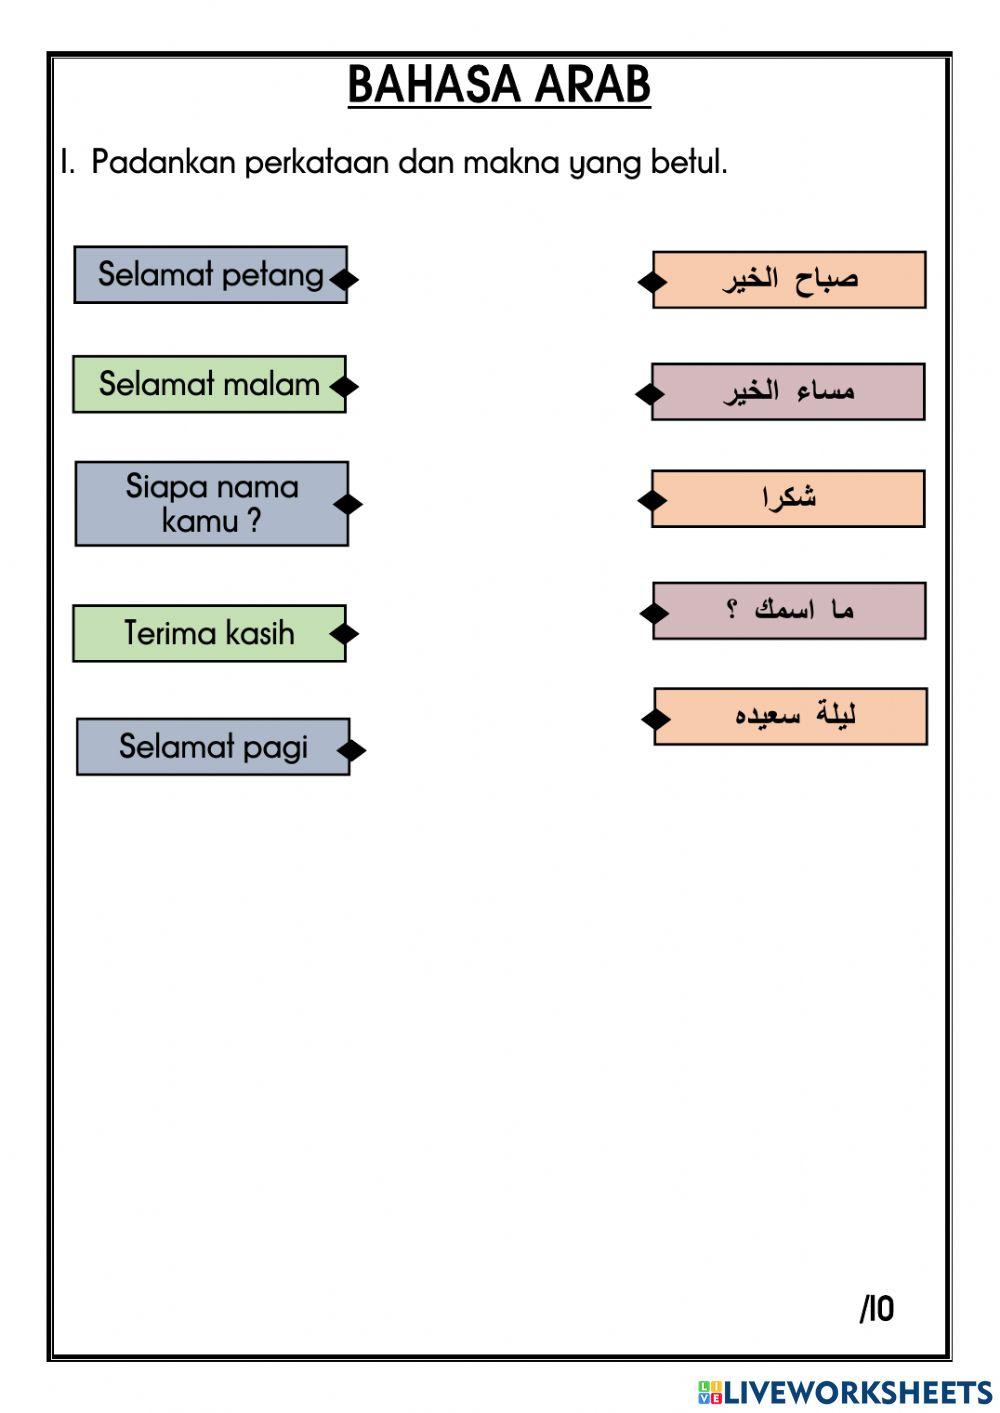 Bahasa arab pdpr 5 thn part 1